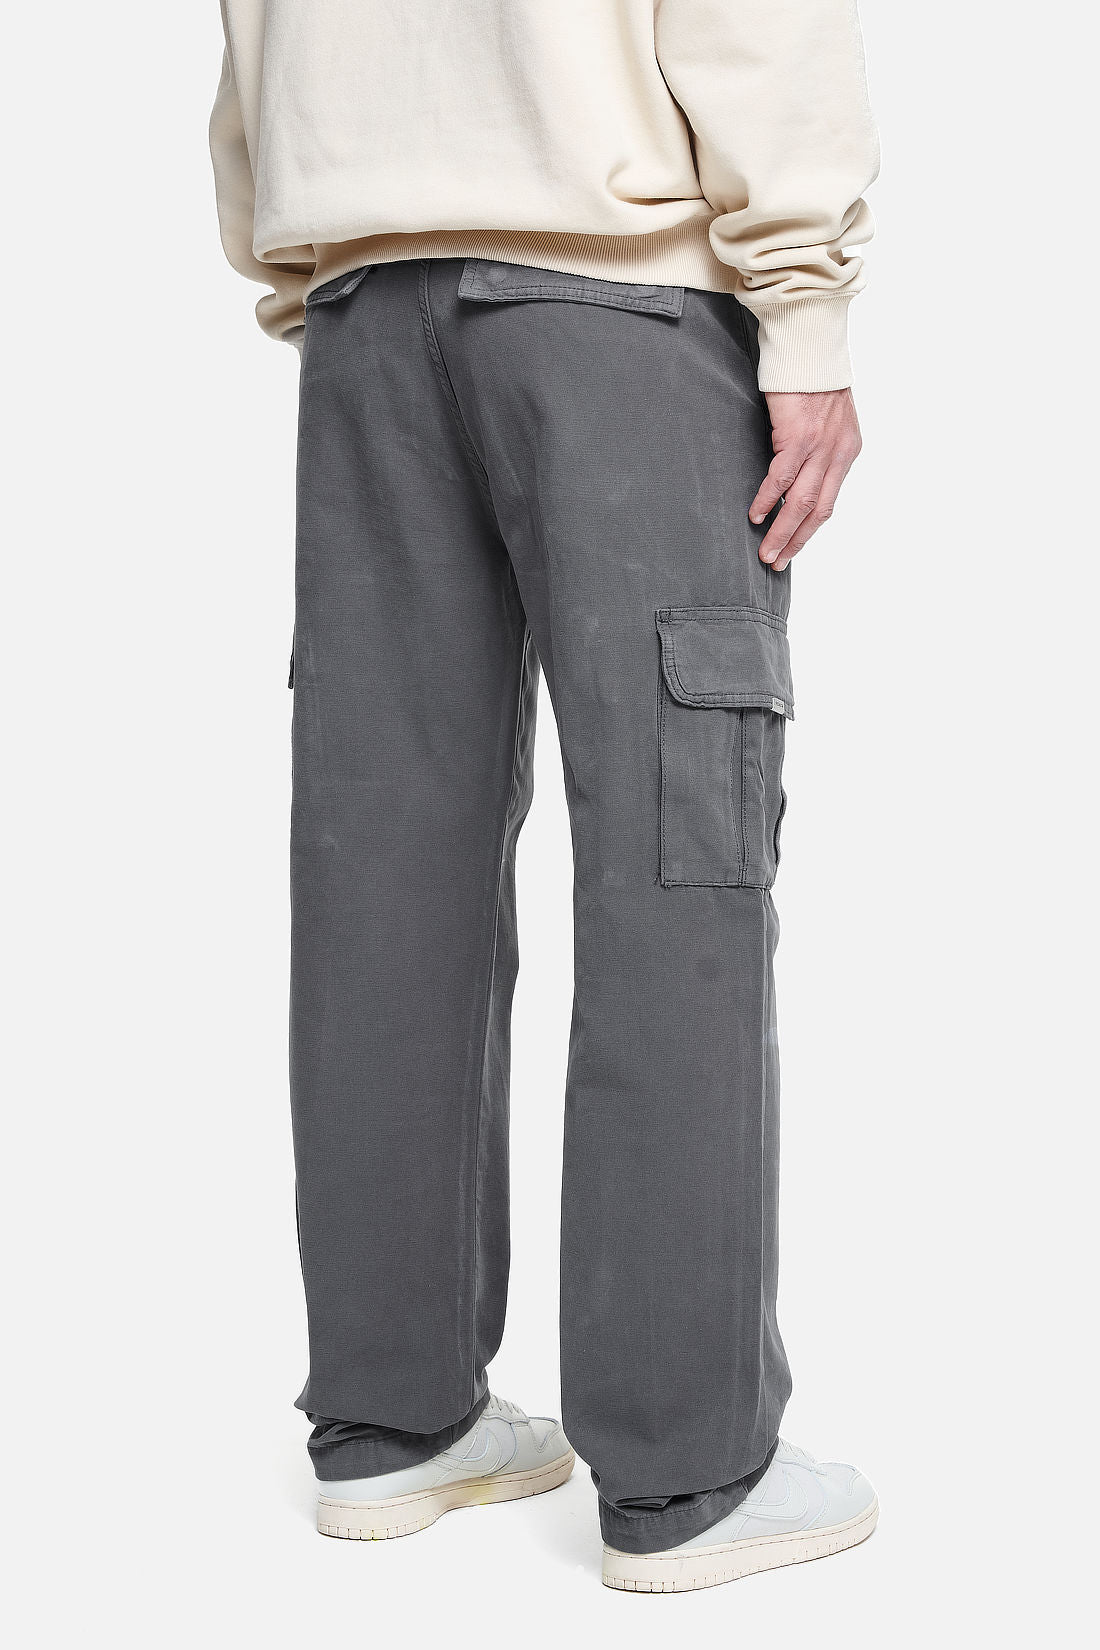 Neiva Cargo Pants Grey